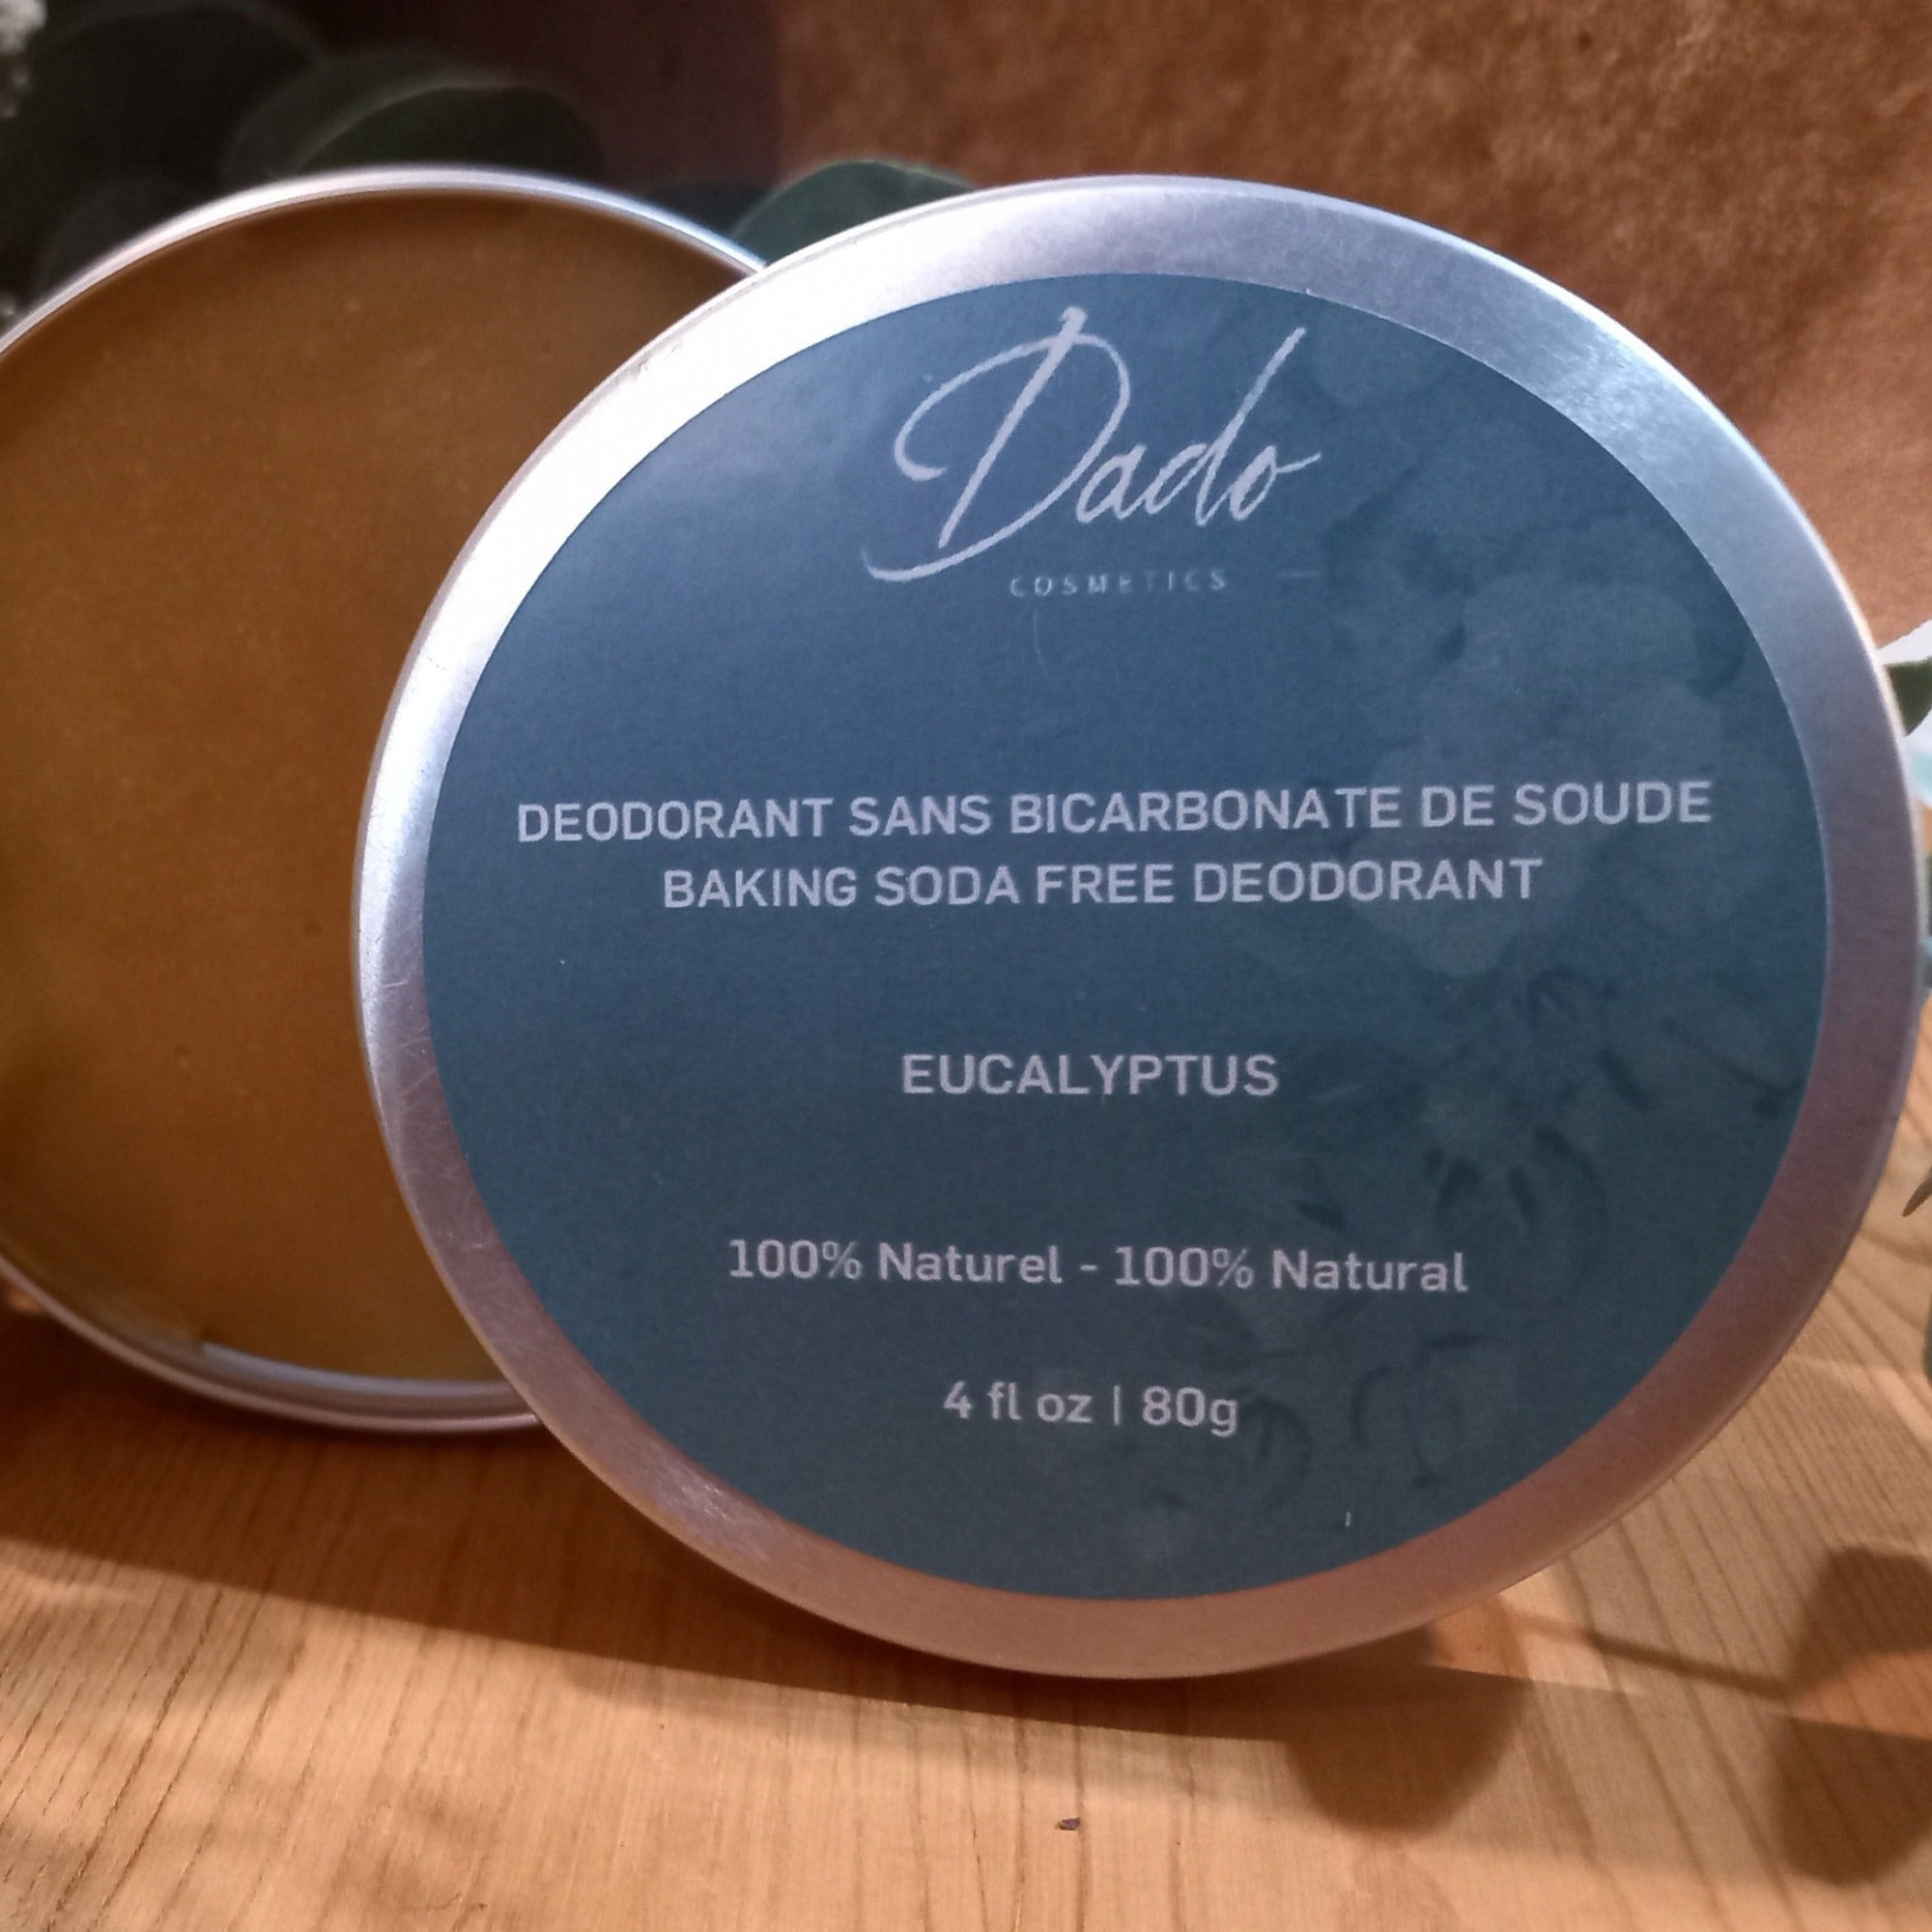 Déodorant naturel sans bicarbonate de soude - Eucalyptus- 80g - Dado Cosmetics